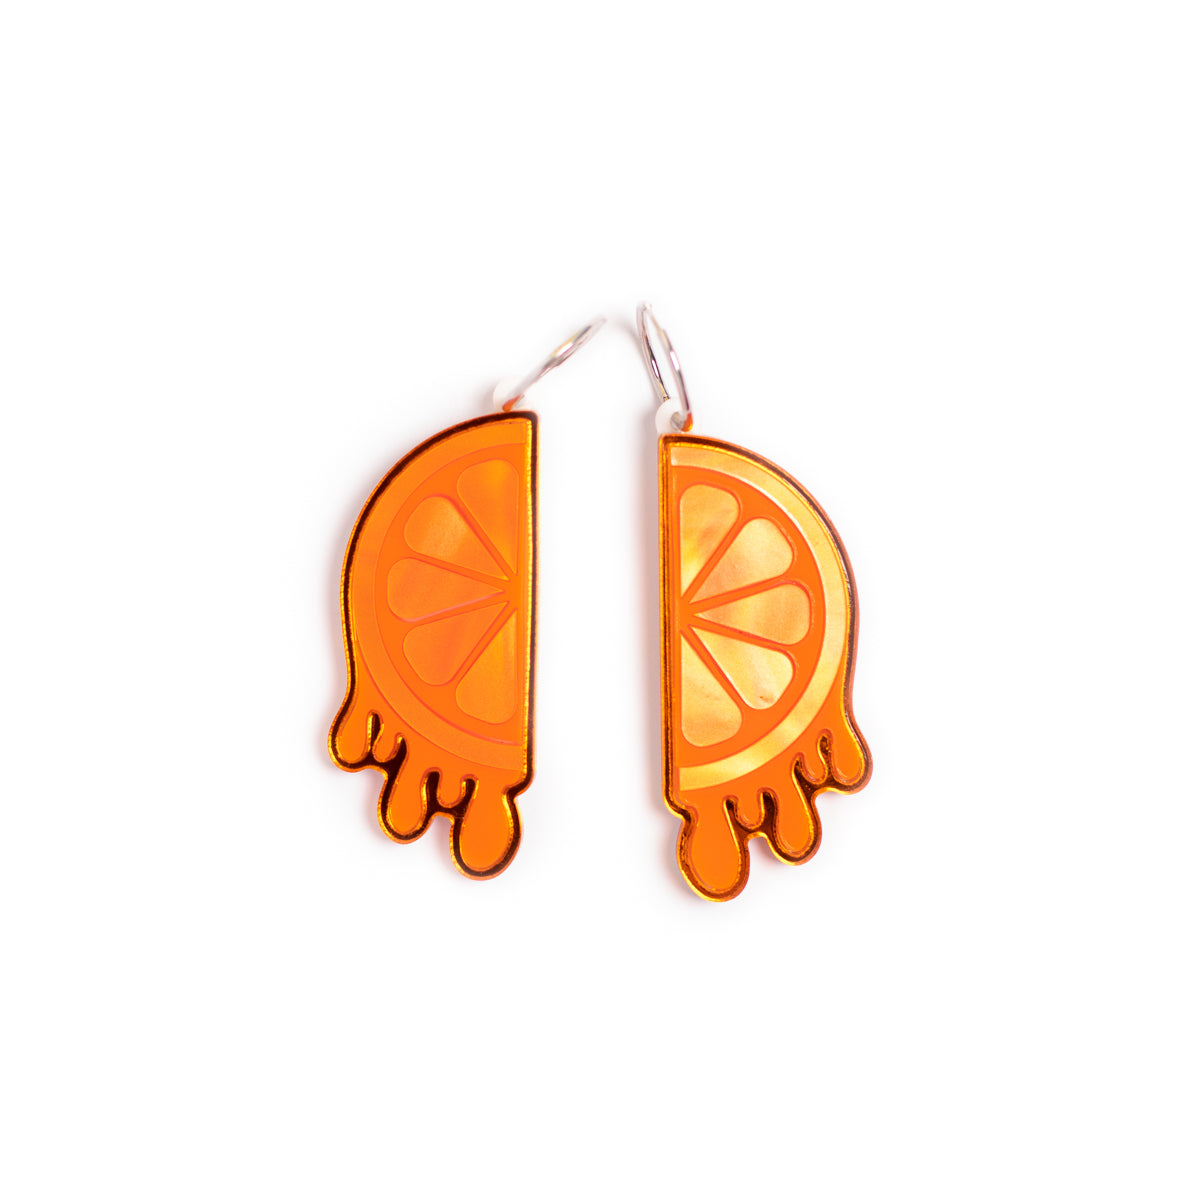 The Orange Earrings